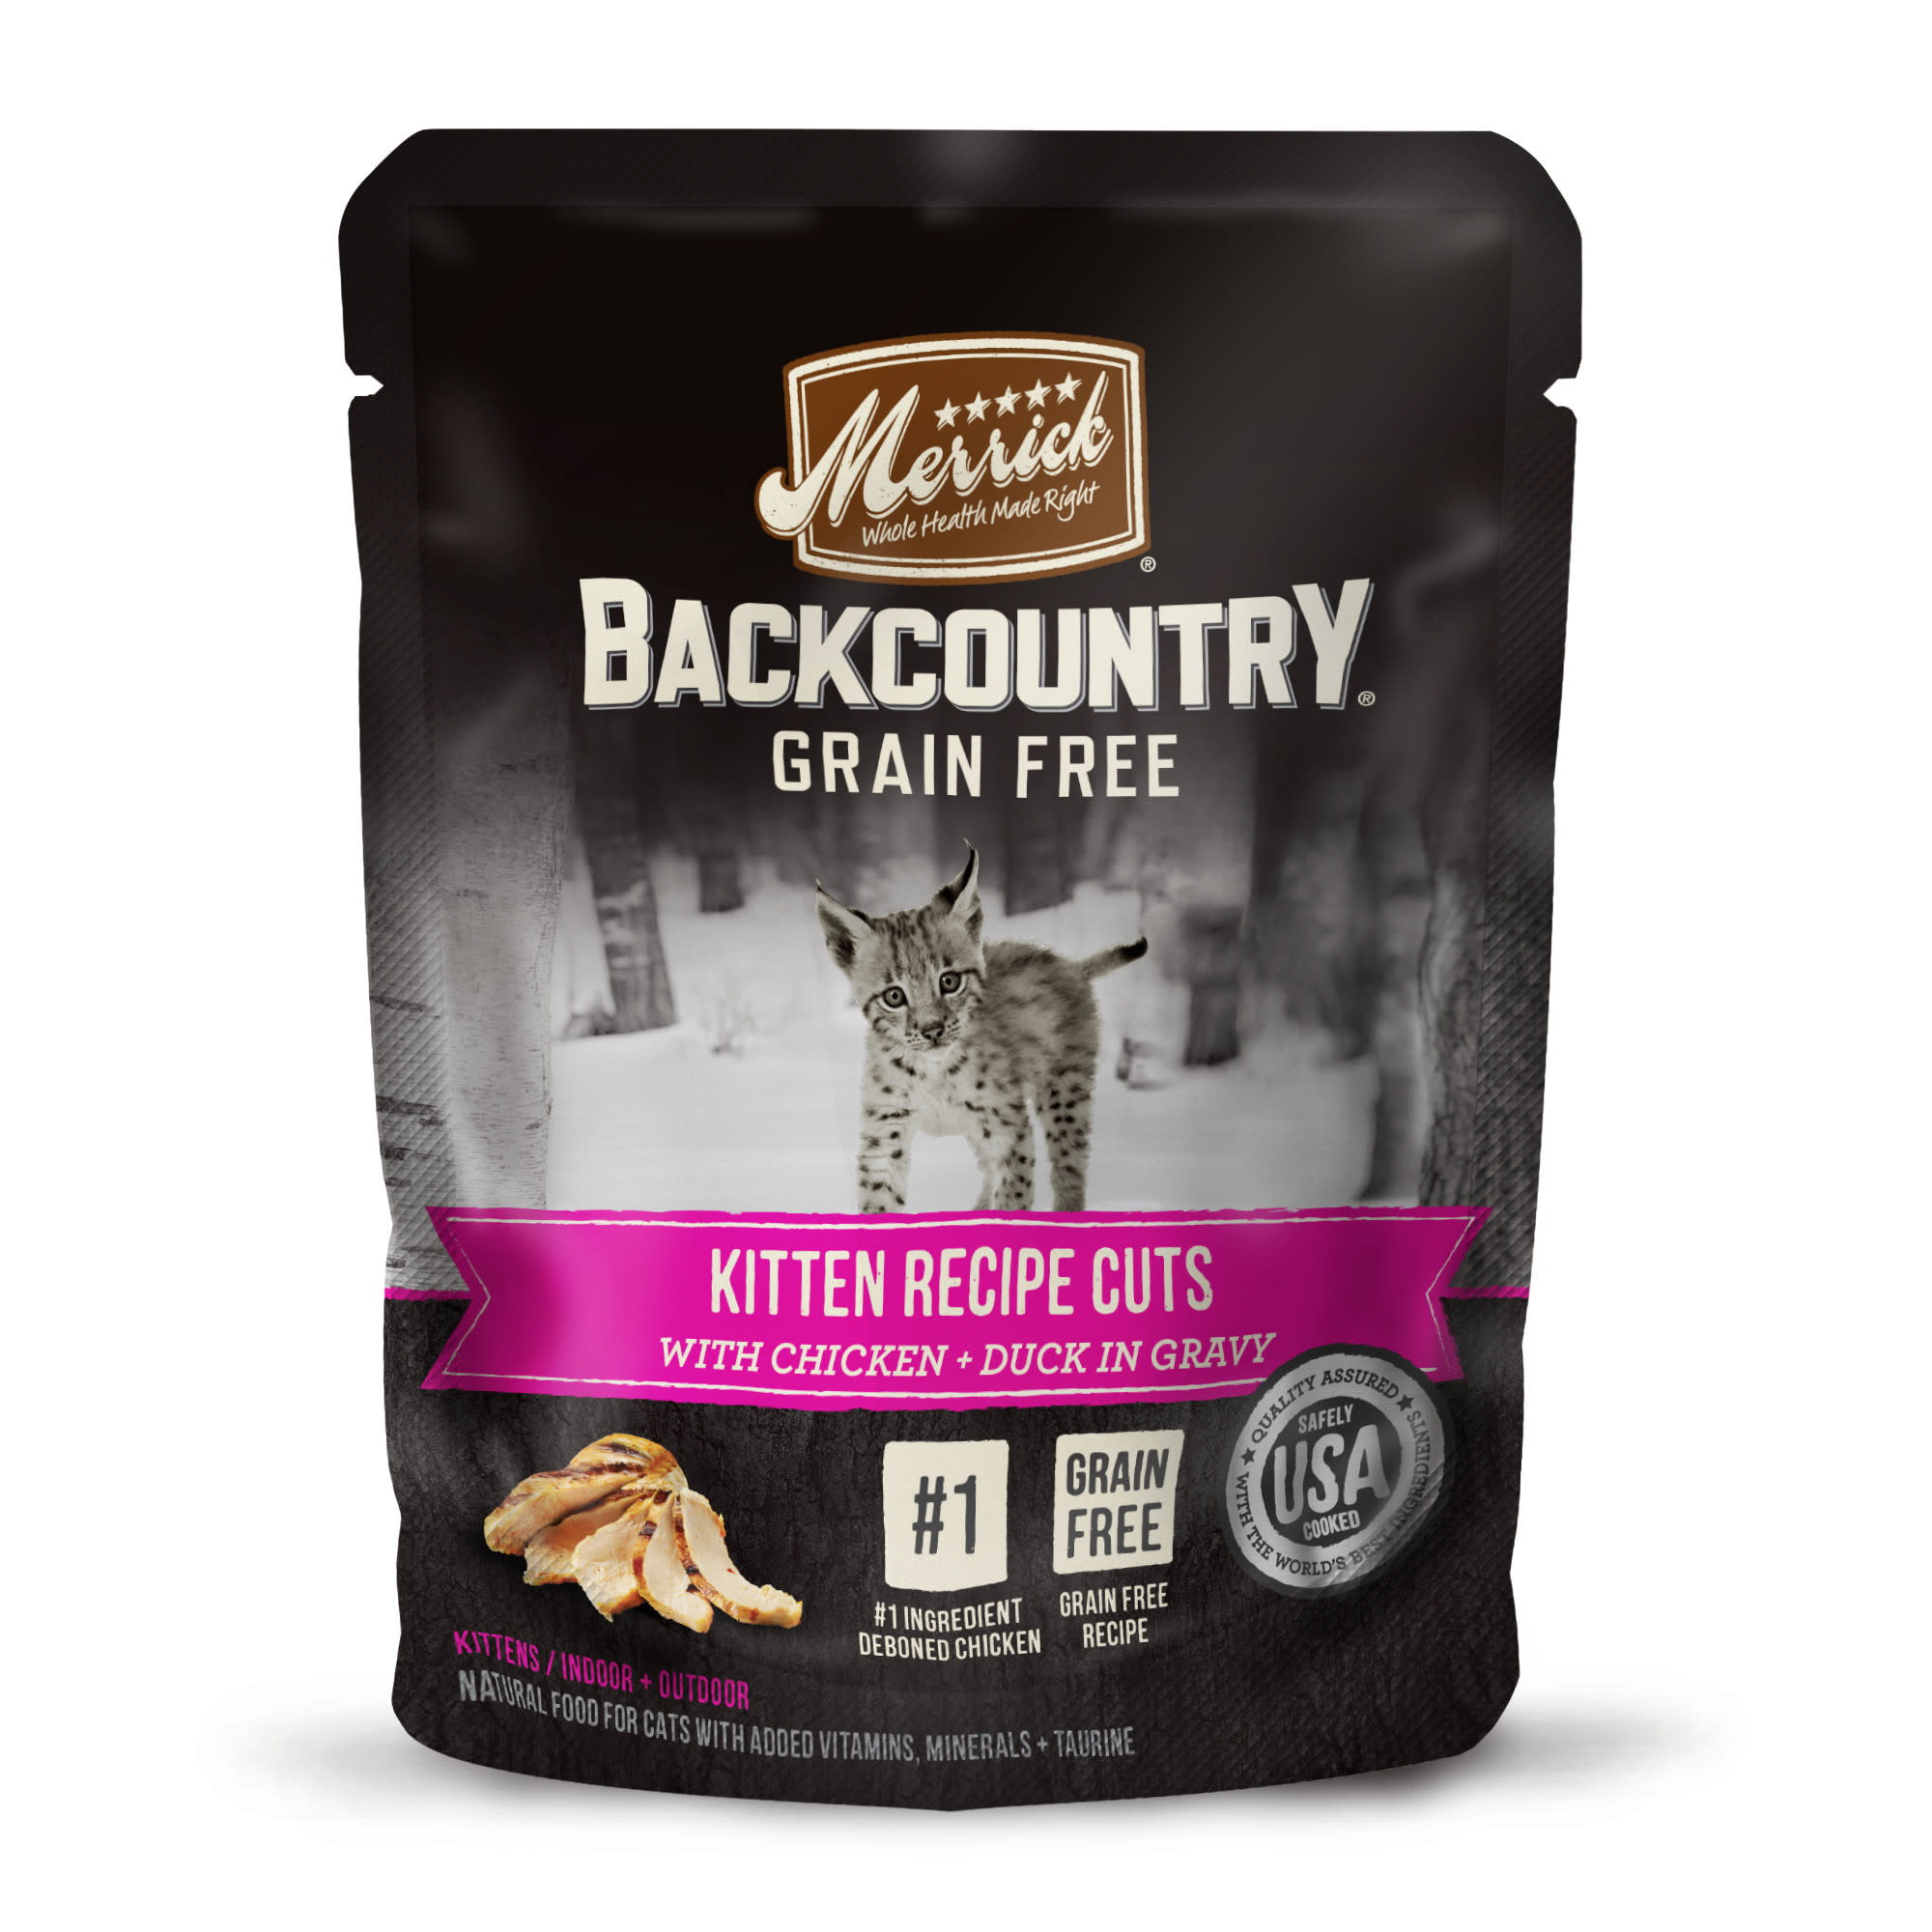 Merrick Backcountry Grain Free Kitten Recipe Cuts Wet Cat Food, 3 oz